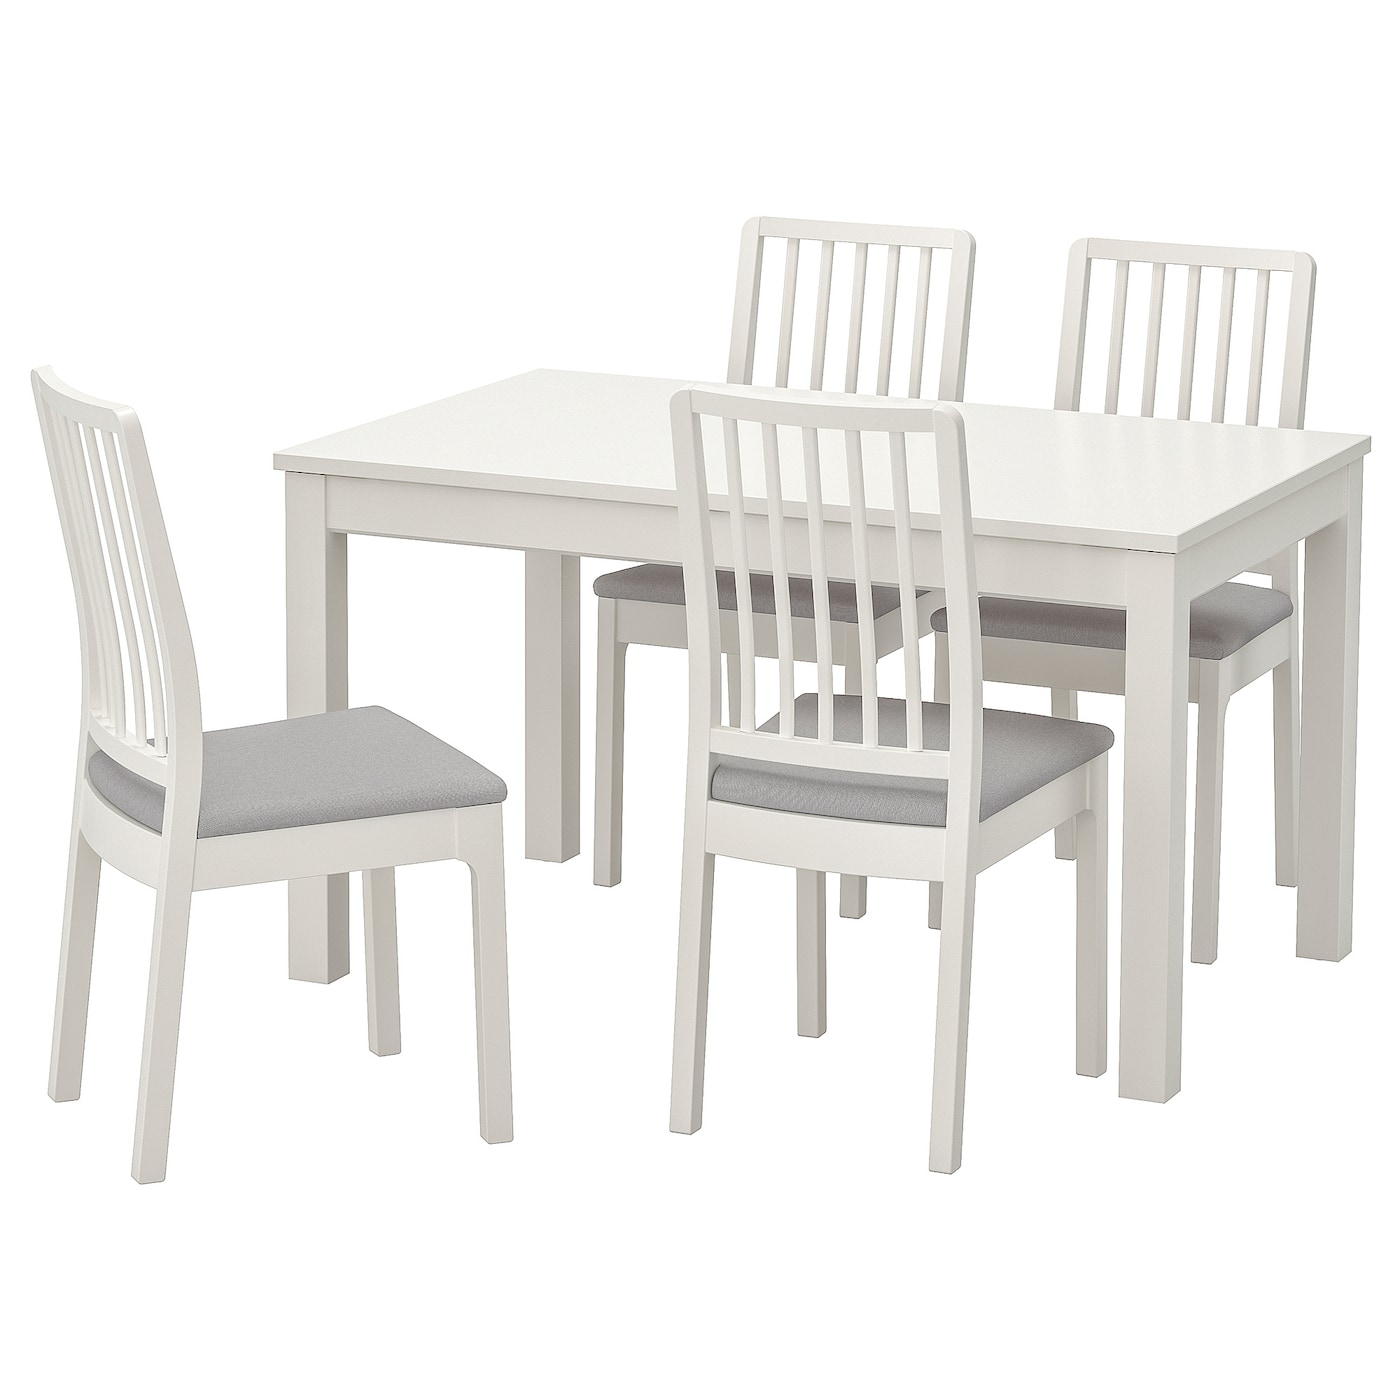 Стол и 4 стула - IKEA EKEDALEN/ЭКЕДАЛЕН ИКЕА, 120х180x80 см, белый/серый